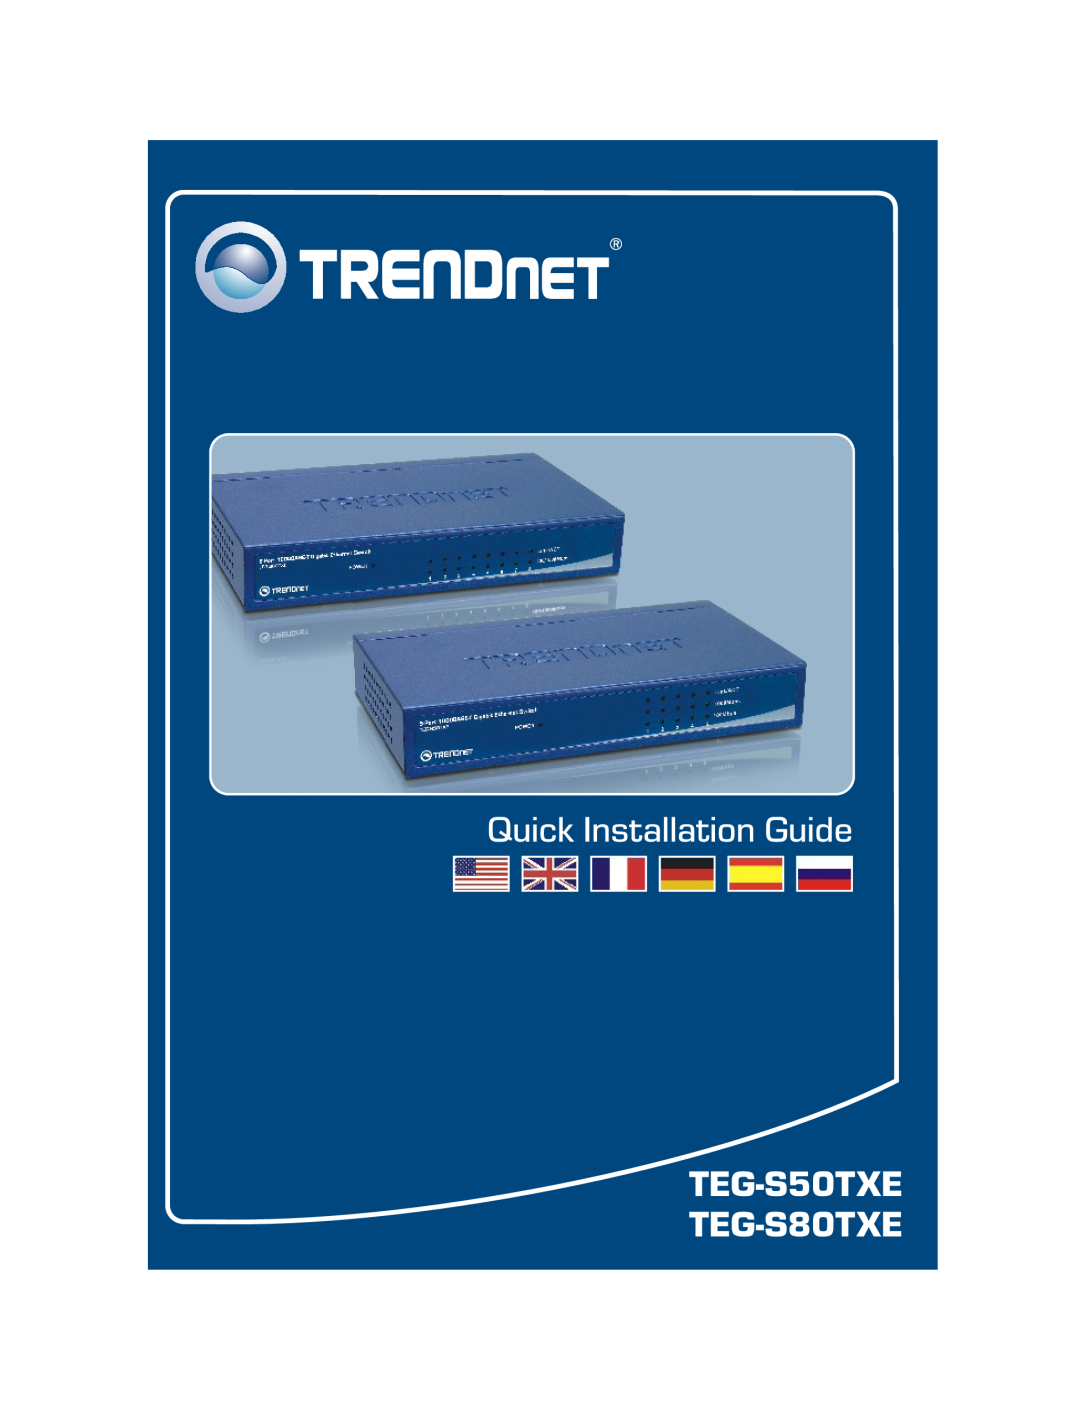 TRENDnet manual Quick Installation Guide, TEG-S50TXE TEG-S80TXE 